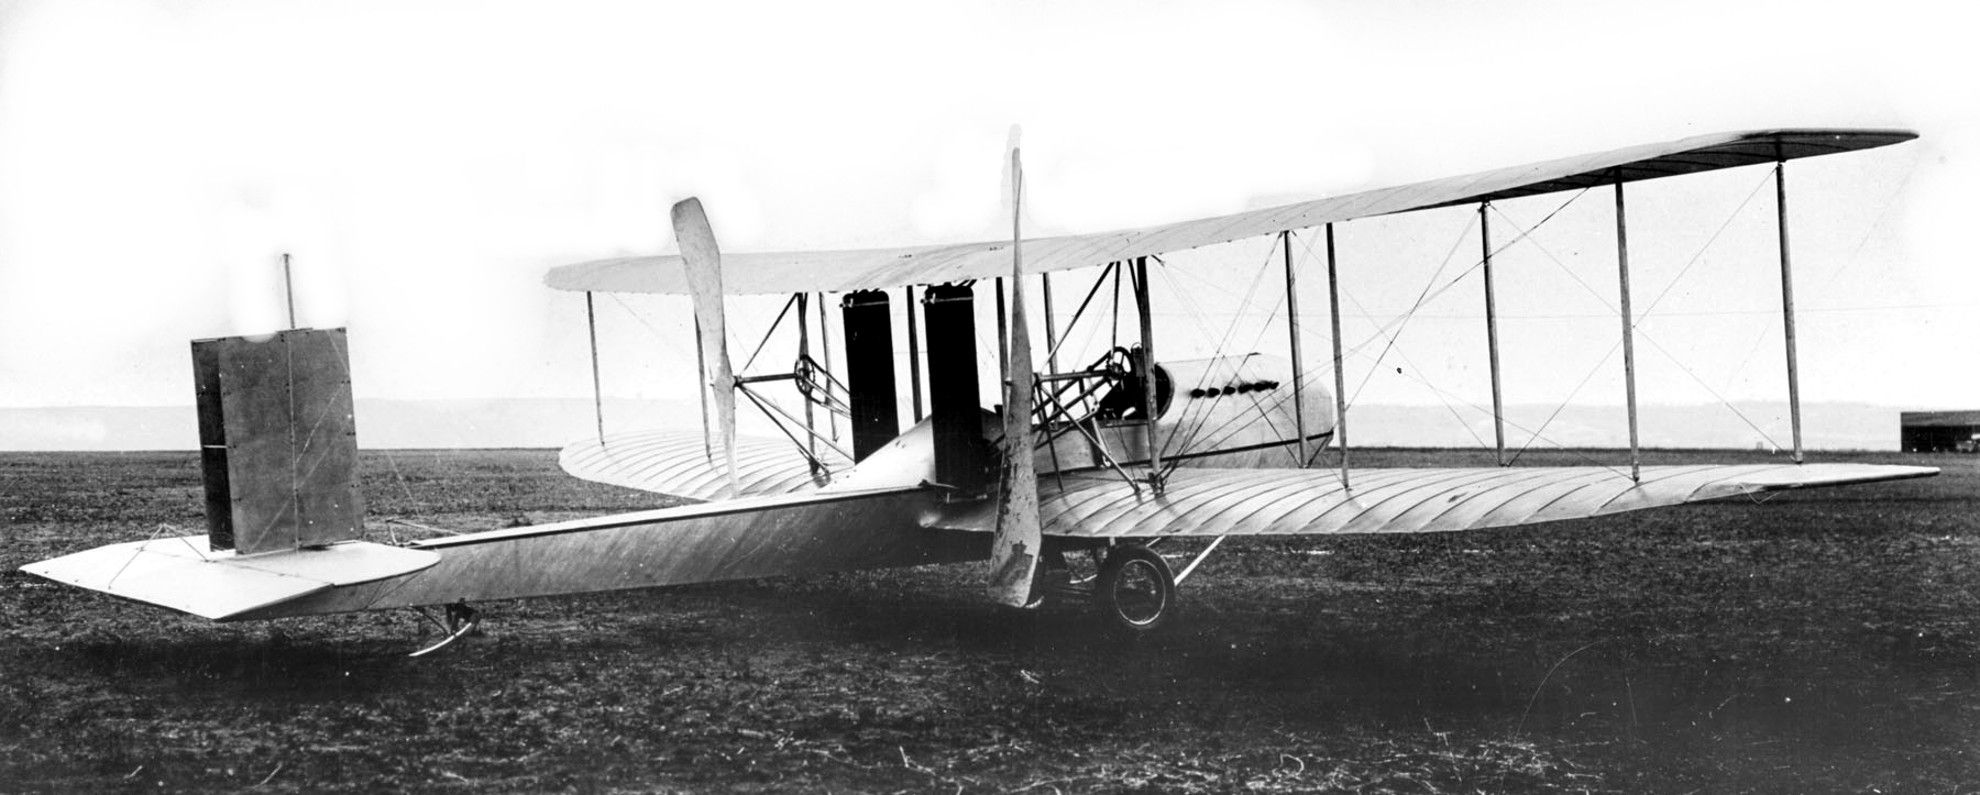 Wright_Model_F_in_1914